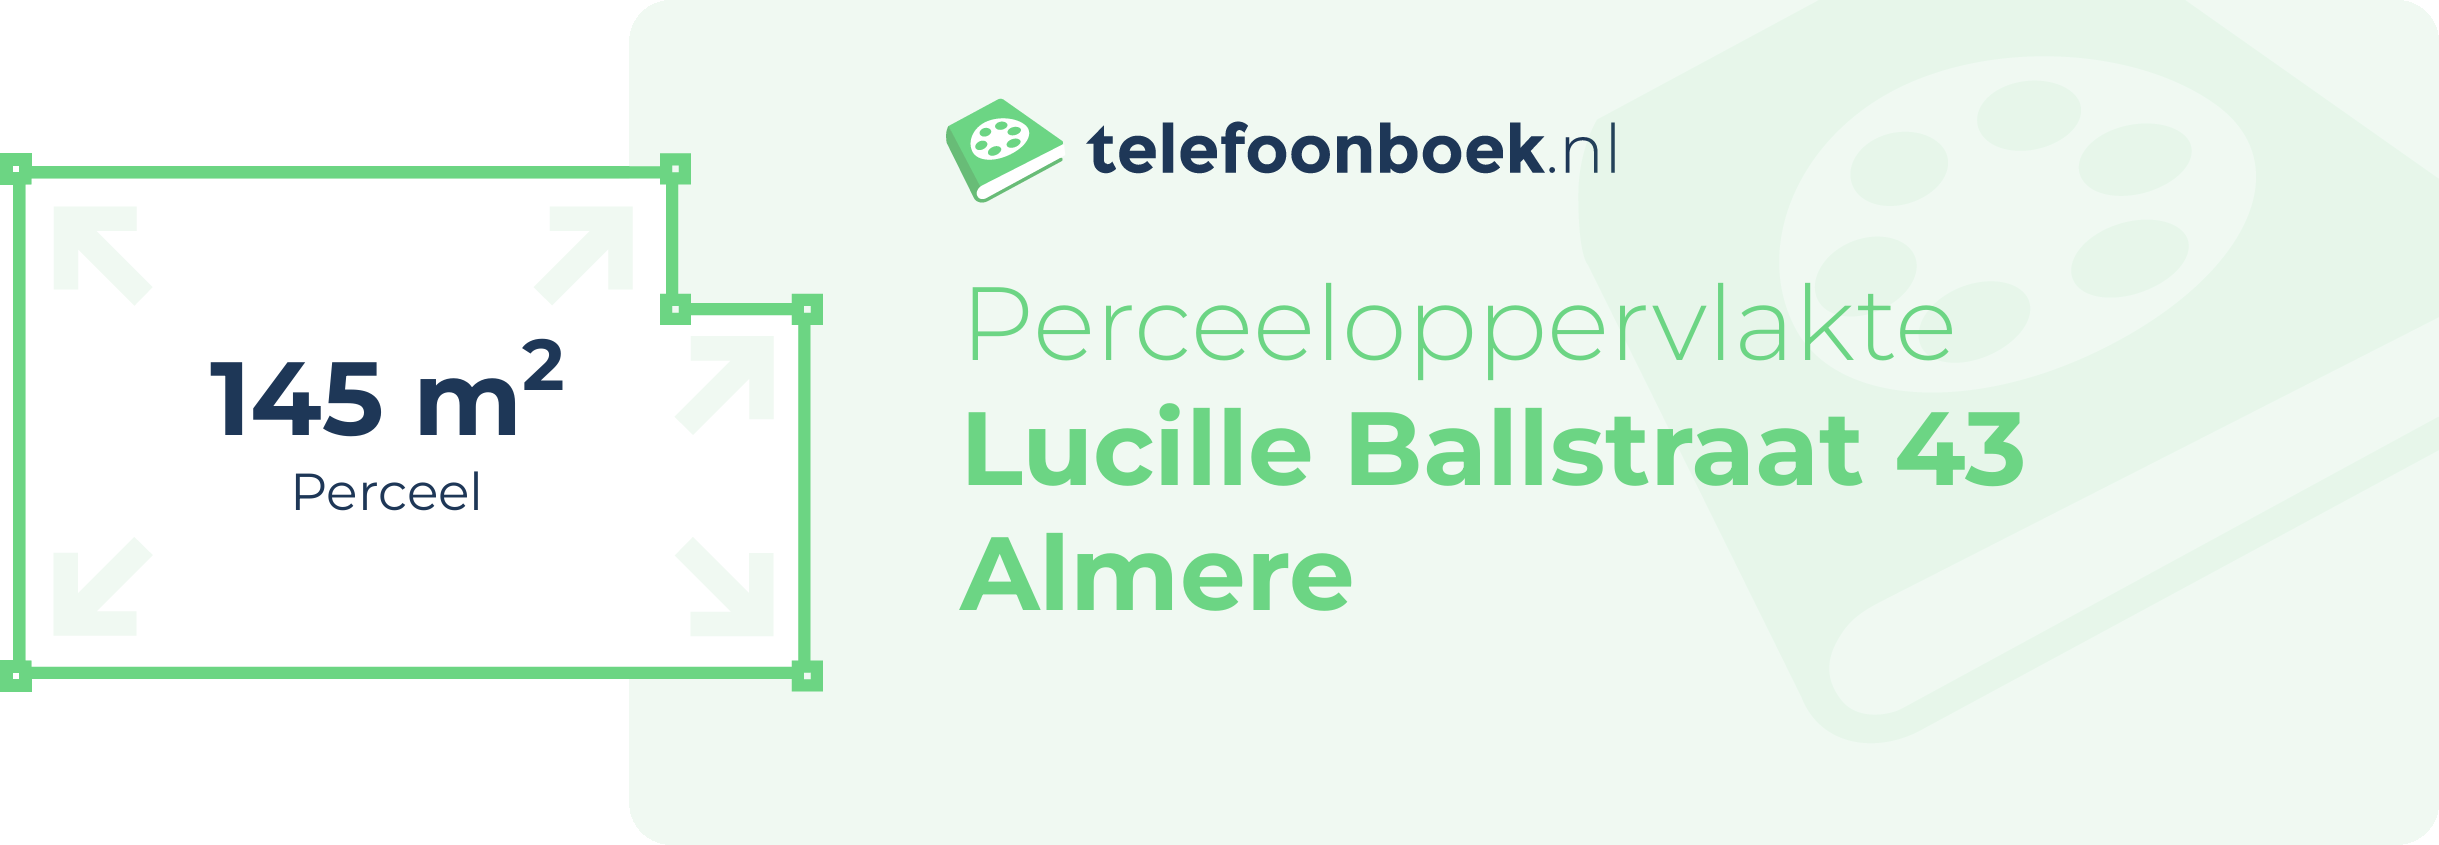 Perceeloppervlakte Lucille Ballstraat 43 Almere